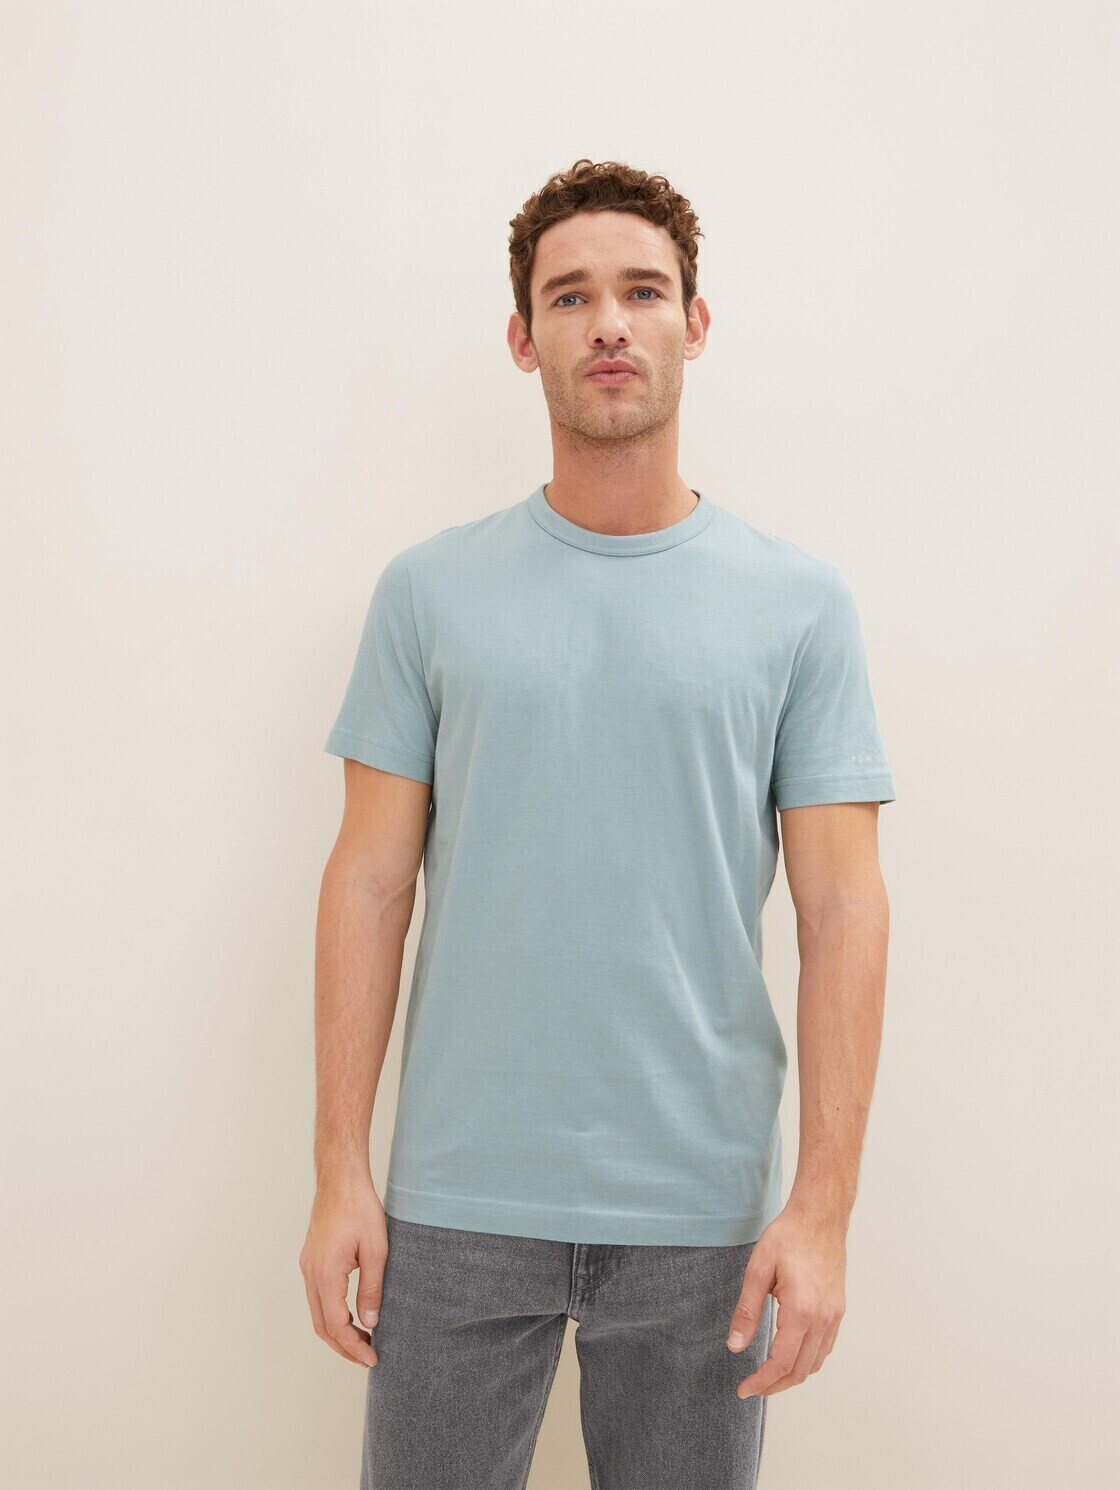 Tom Tailor Basic T-Shirt (1035552) light ice blue ab 15,00 € |  Preisvergleich bei